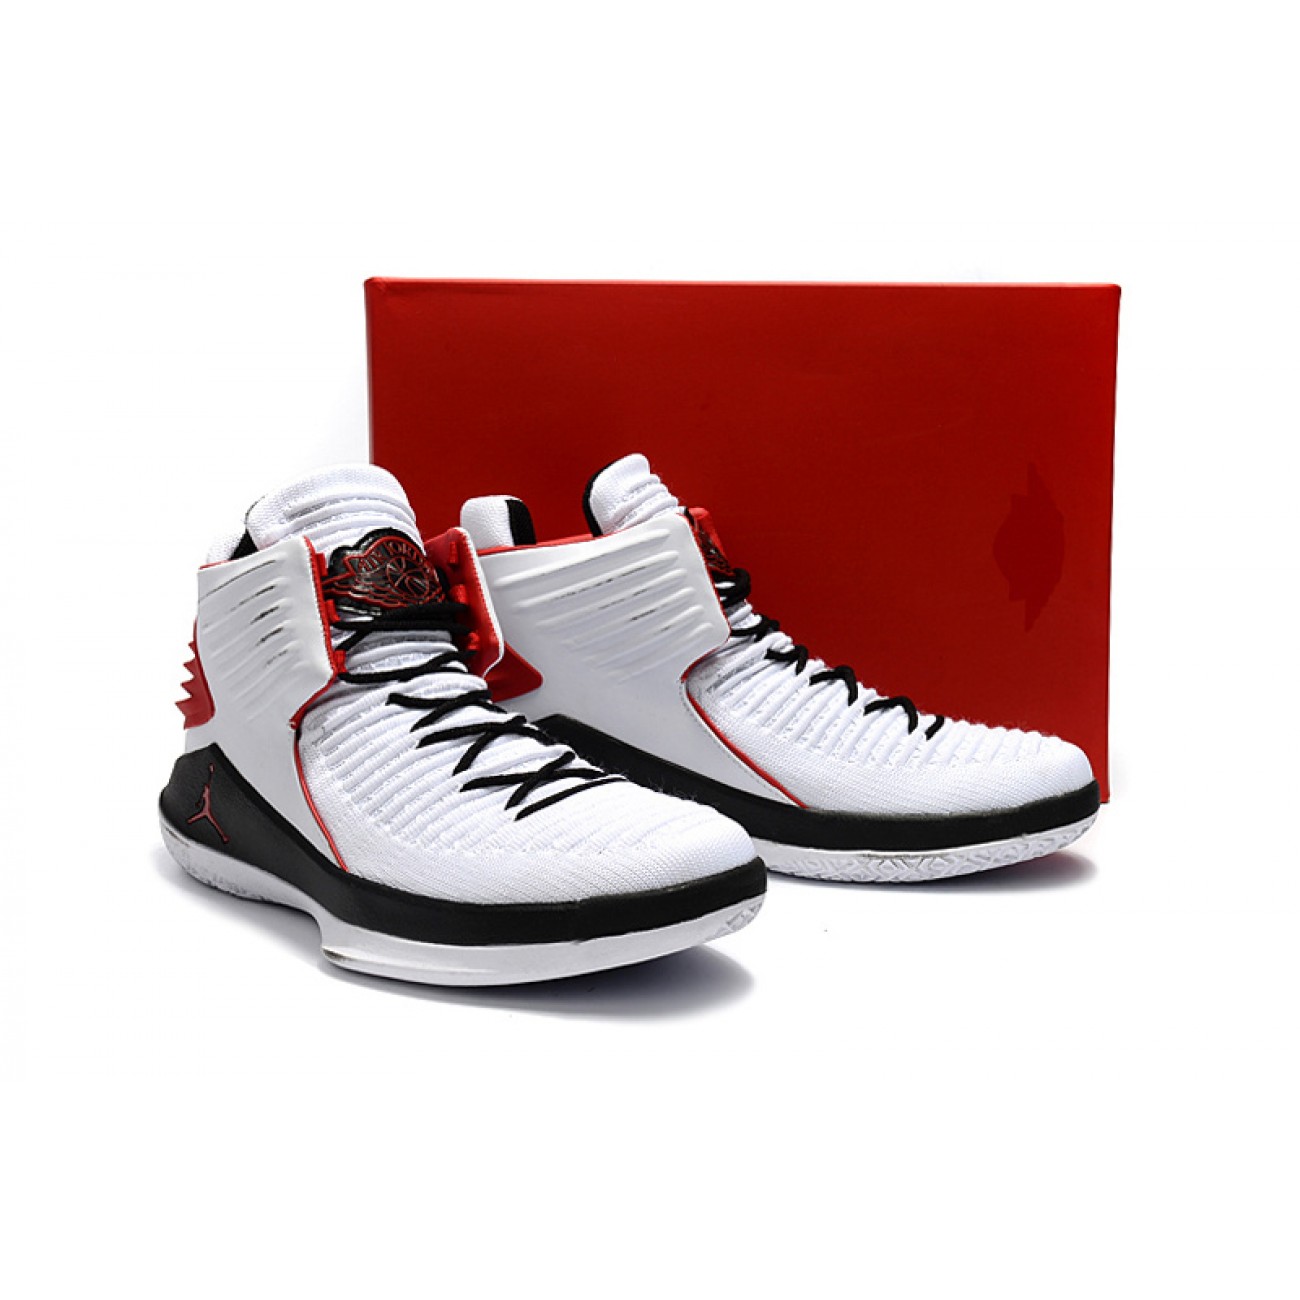 Air Jordan 32 XXXII White/Black/Red